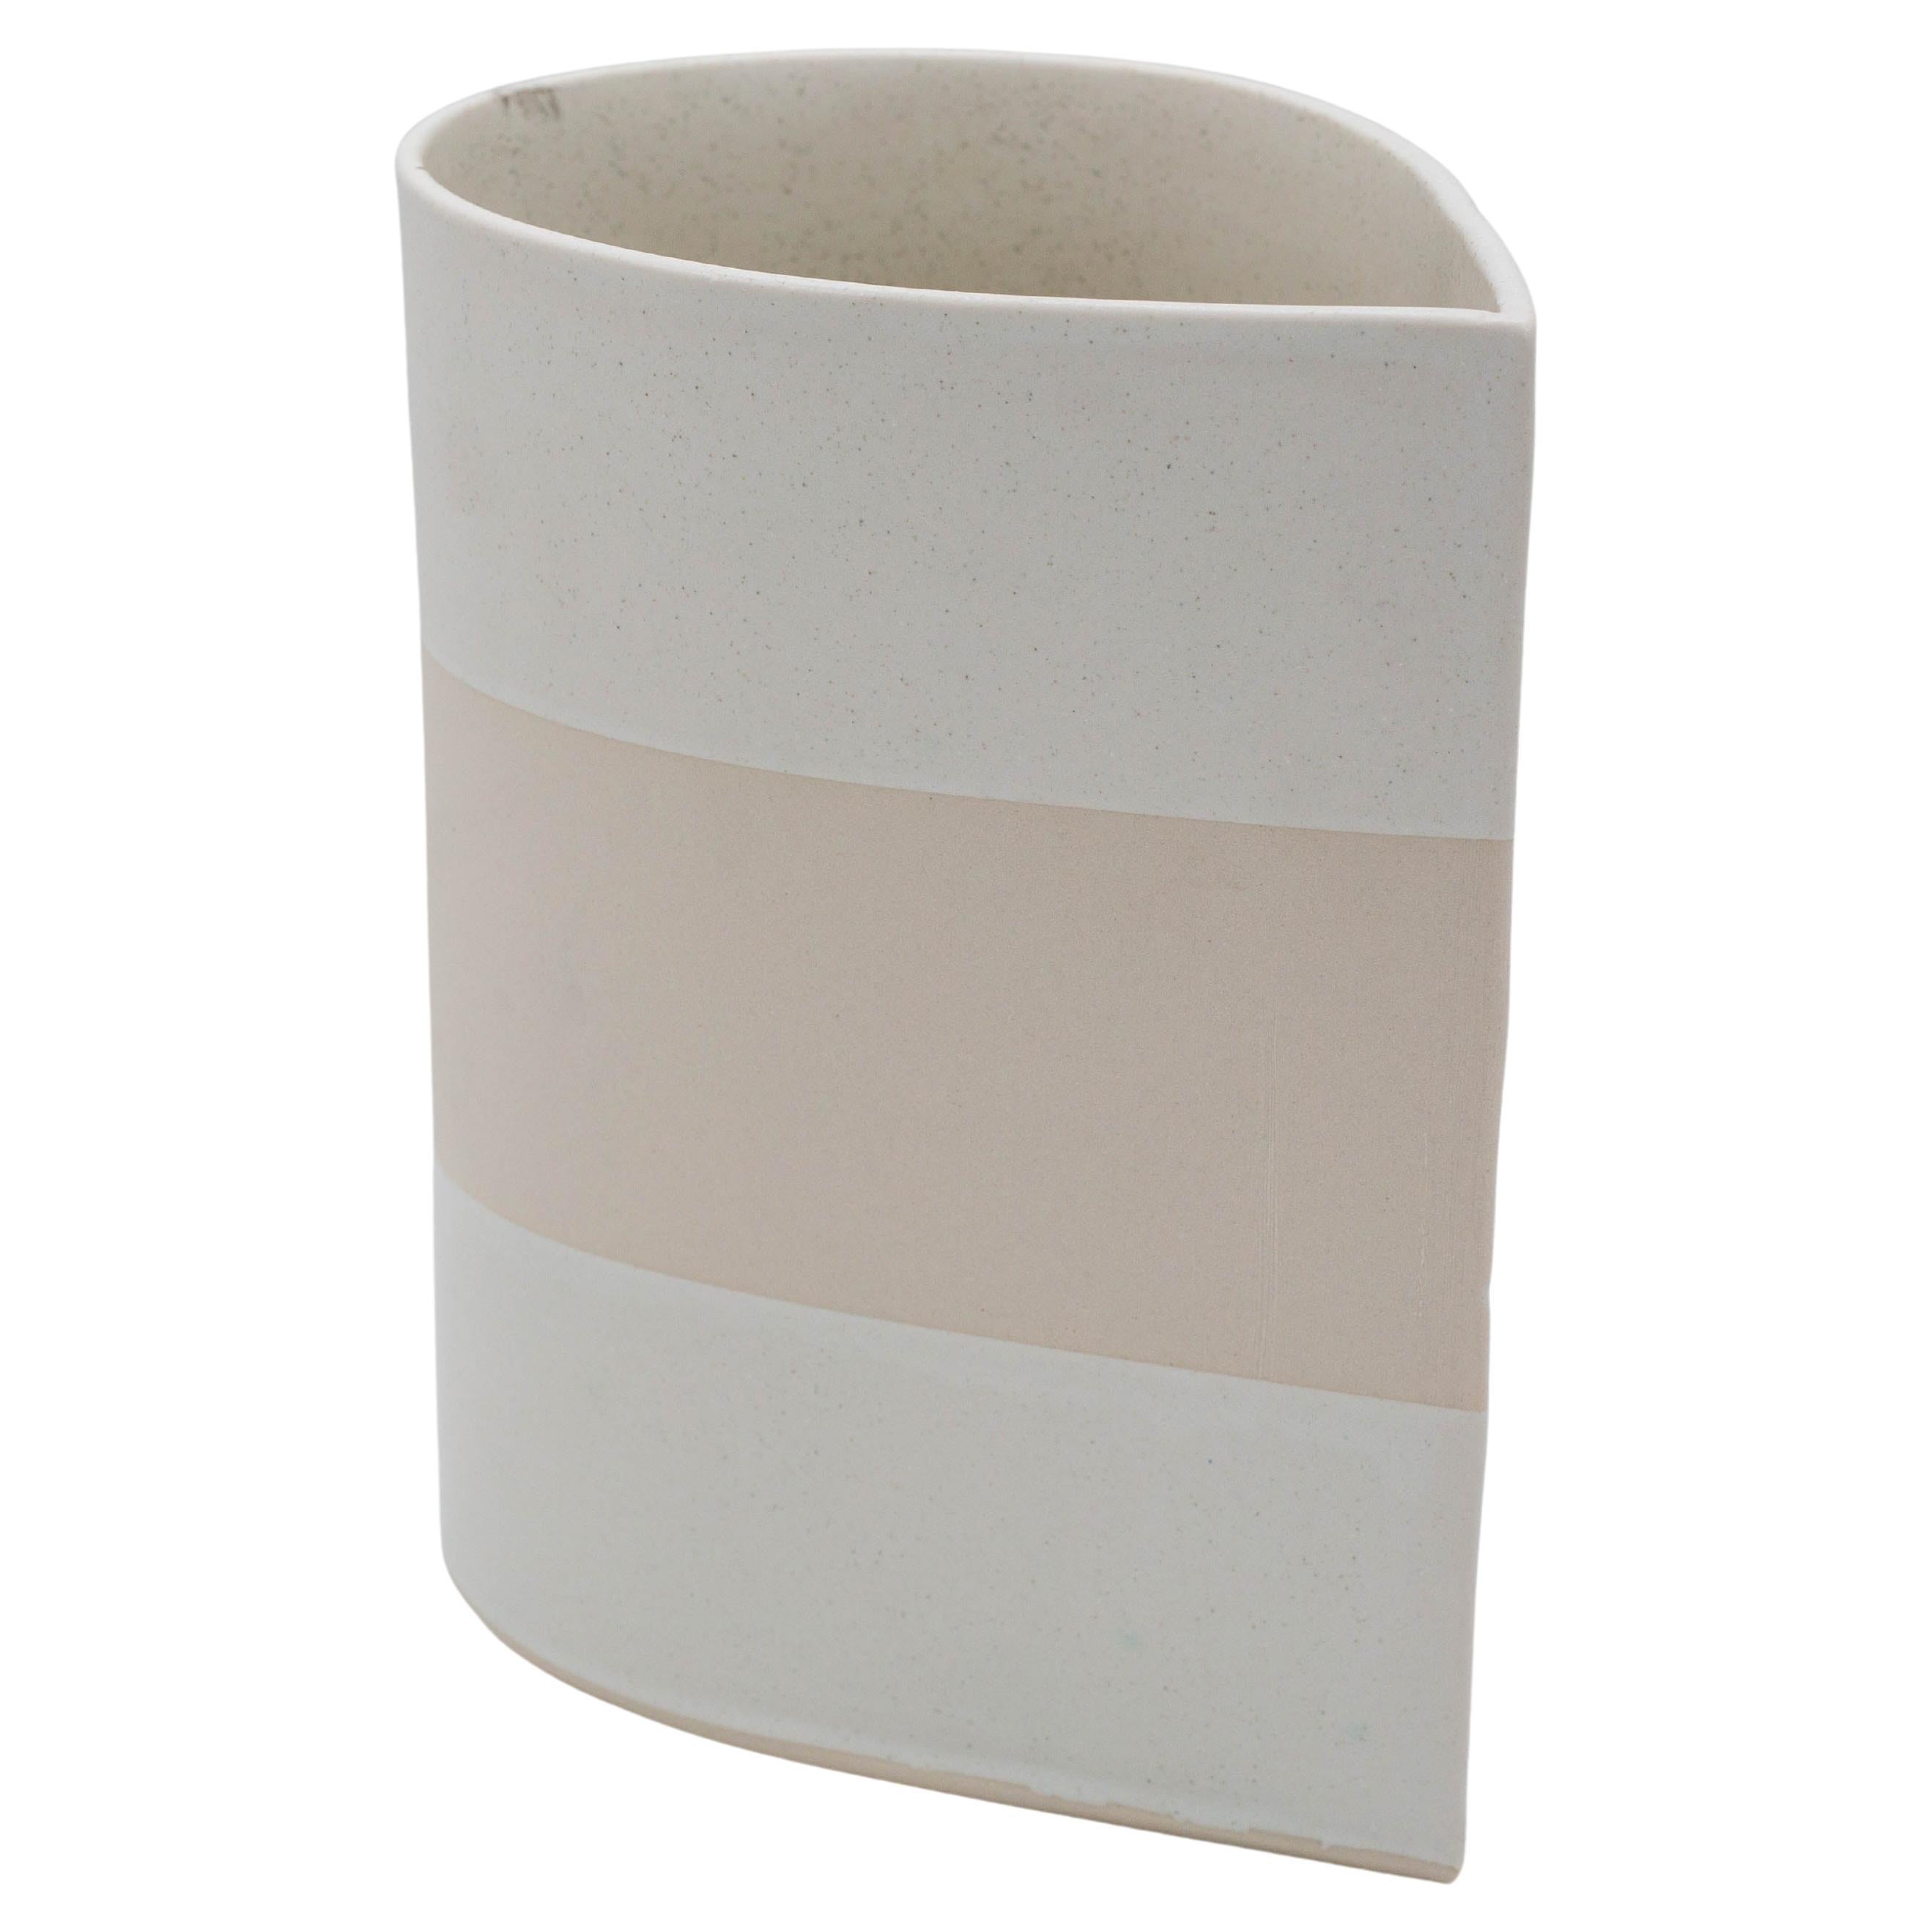 Happy Tears Vase, White Satin Glaze on Porcelain 'Small' For Sale